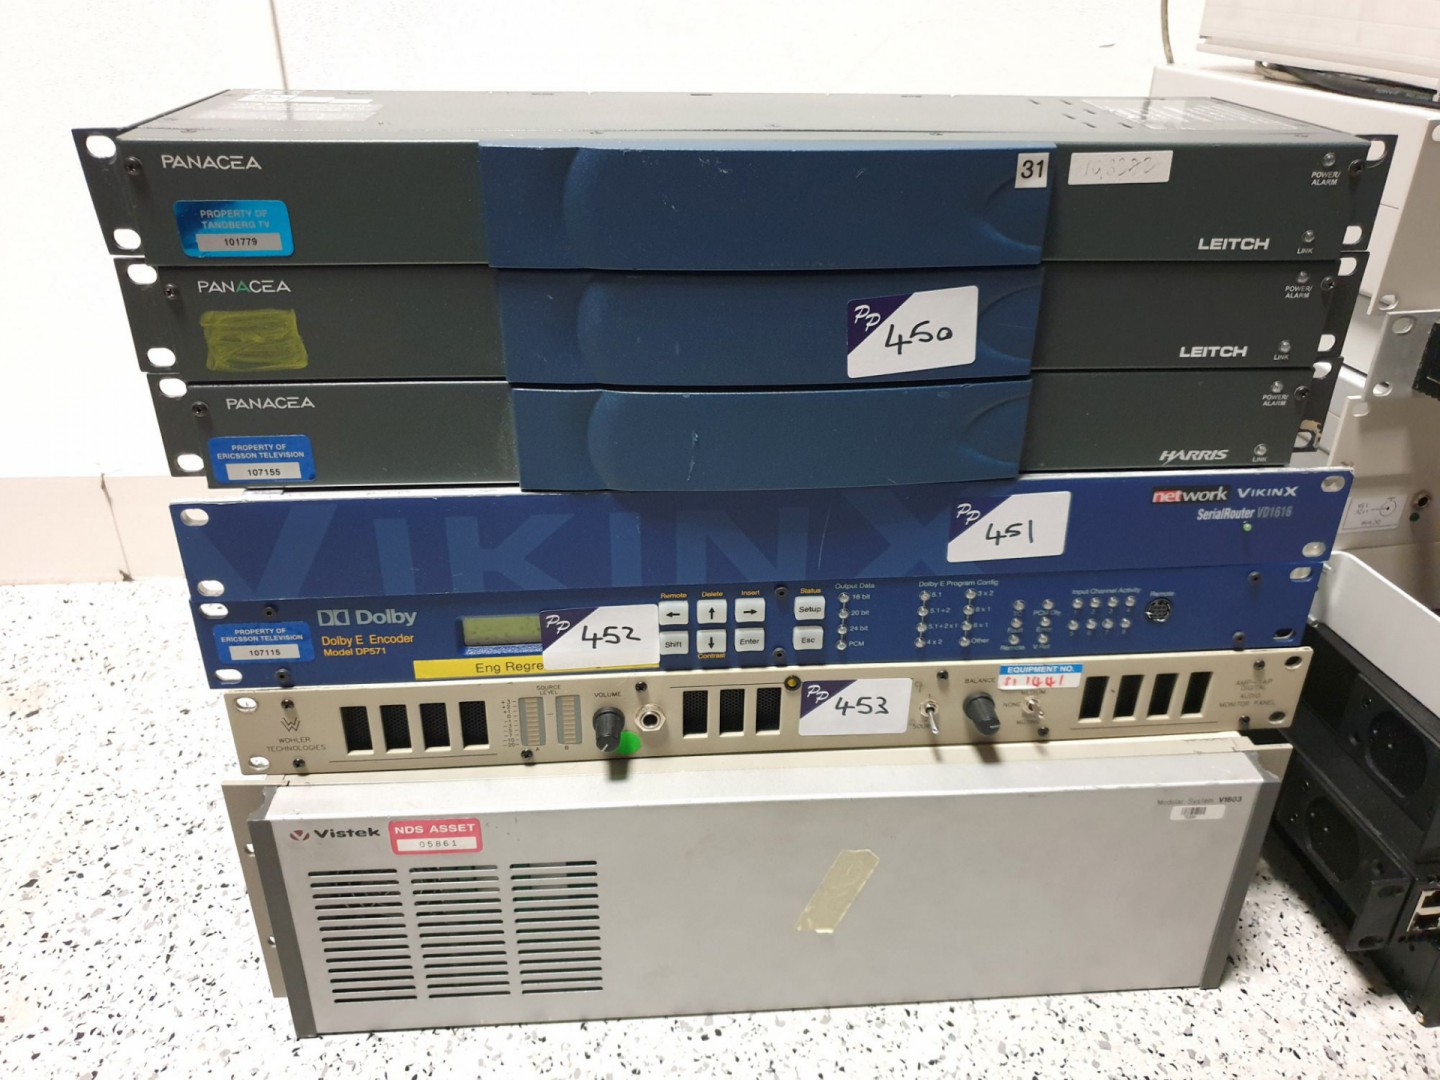 Network Vikin X VD1616 serial router